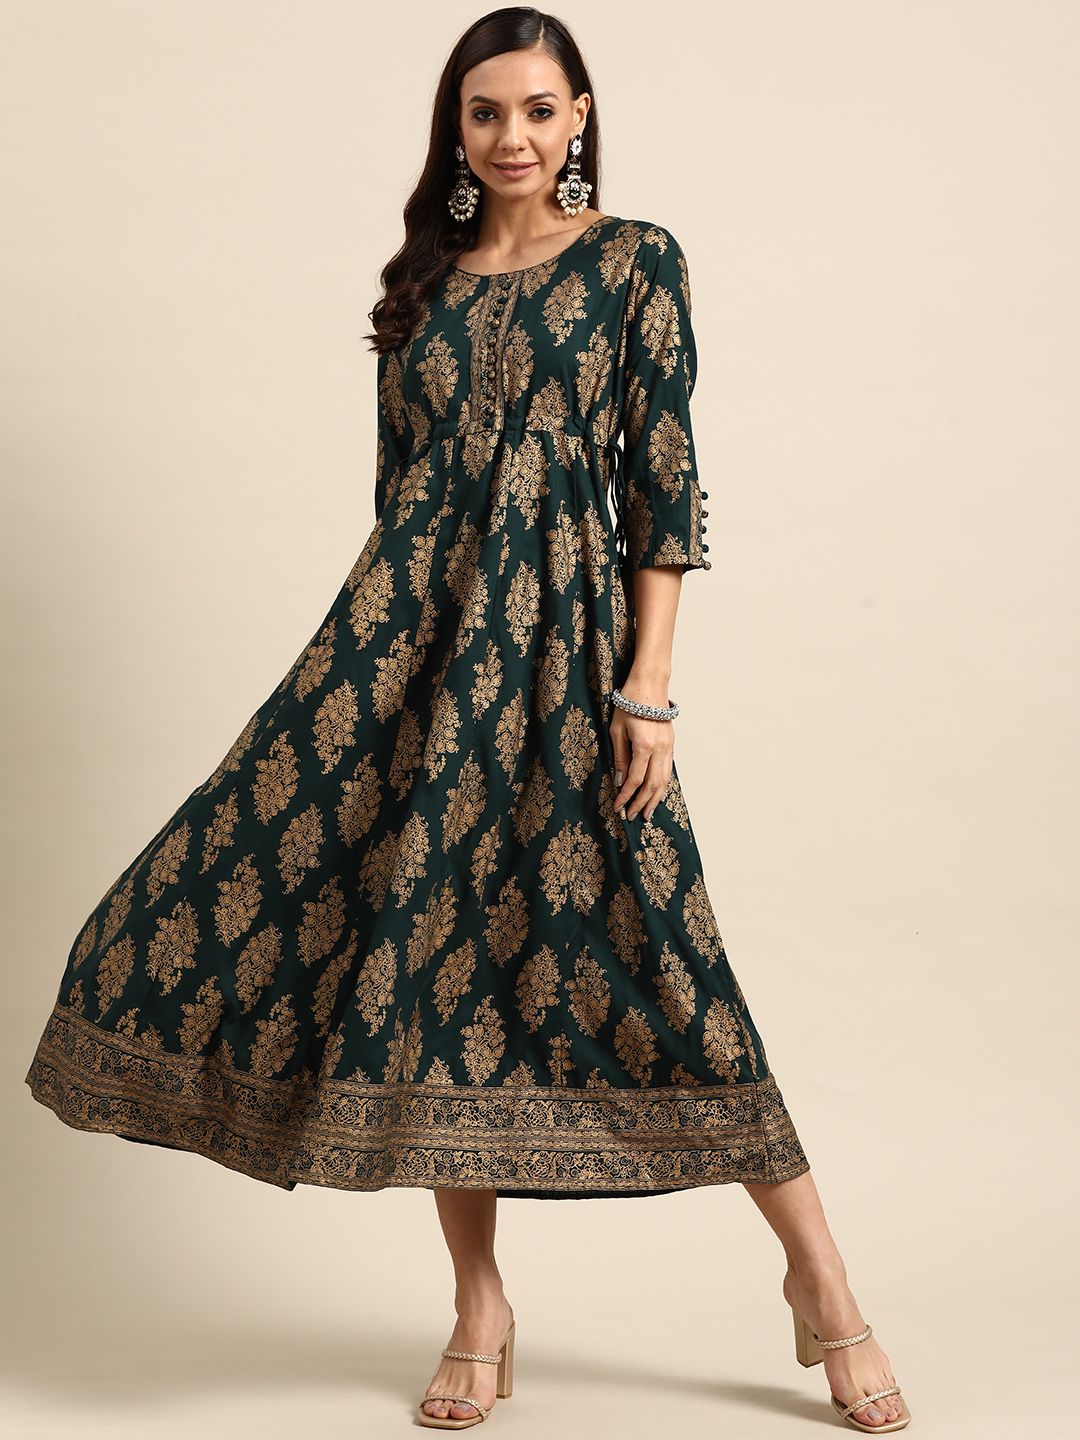 GERUA Green & Gold-Toned Ethnic Motifs Ethnic Midi Dress Price in India